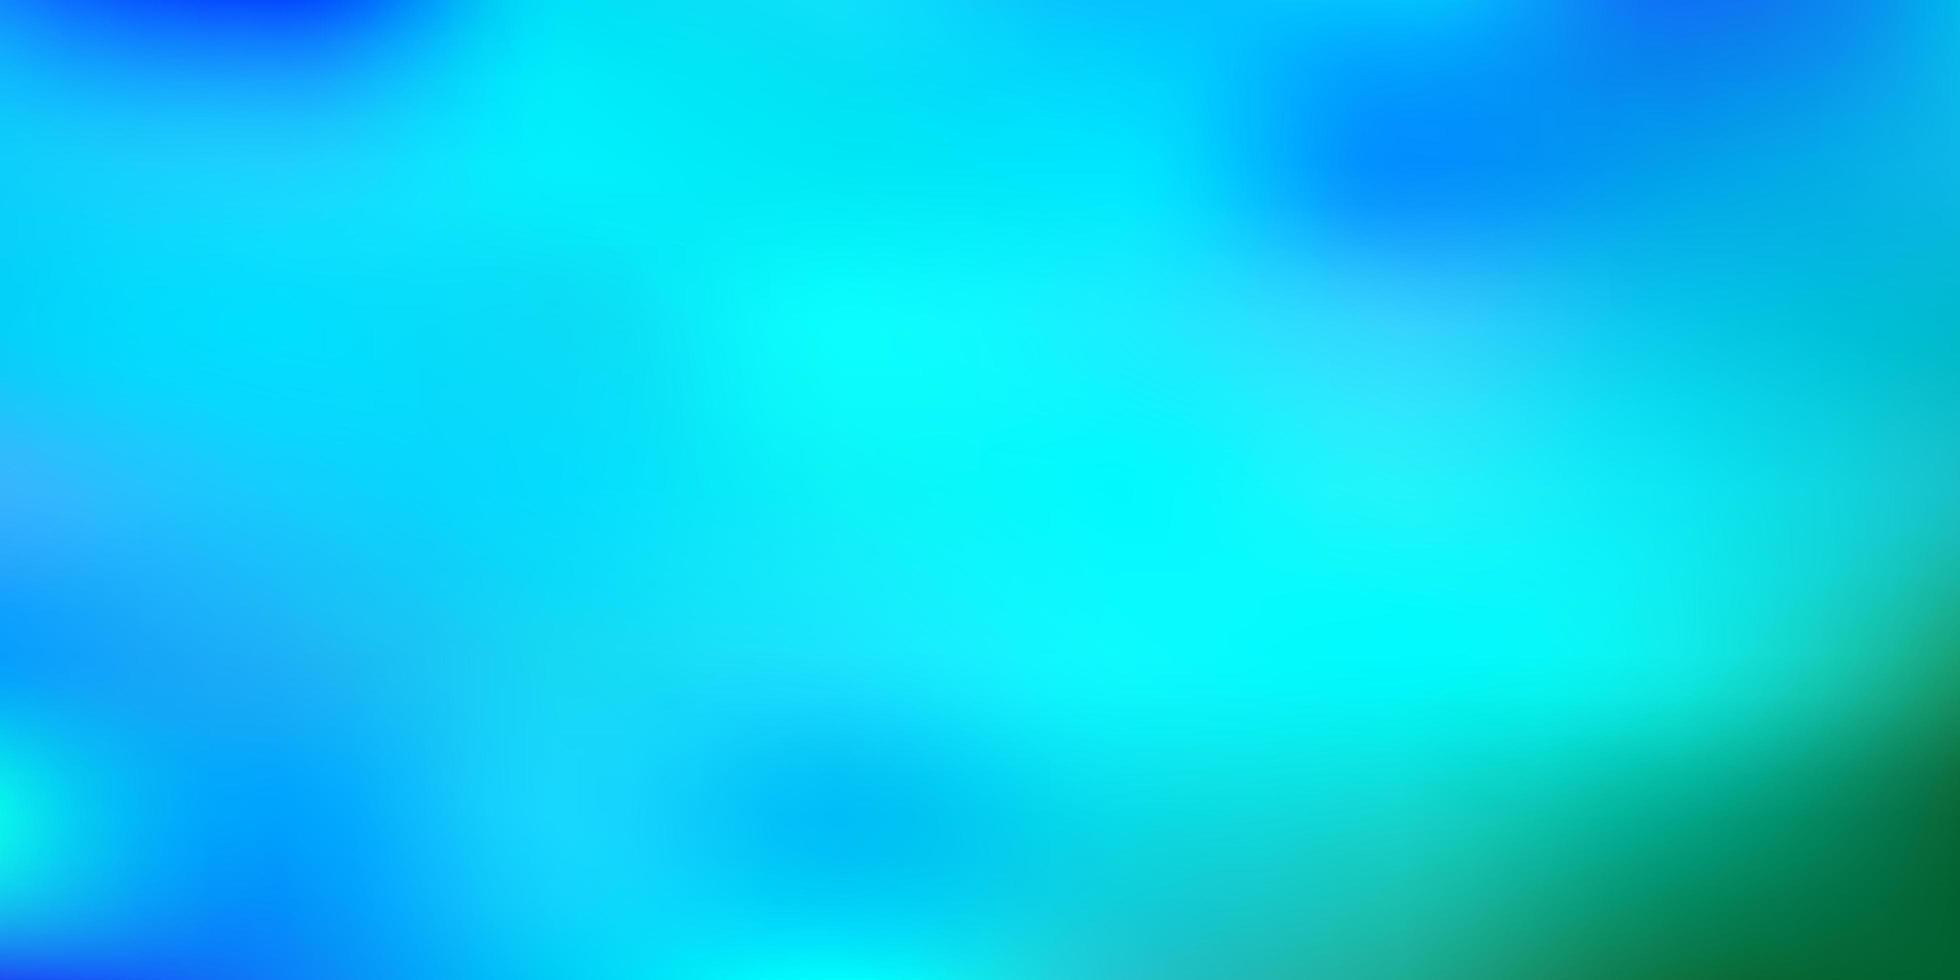 layout di sfocatura gradiente vettoriale blu chiaro, verde.